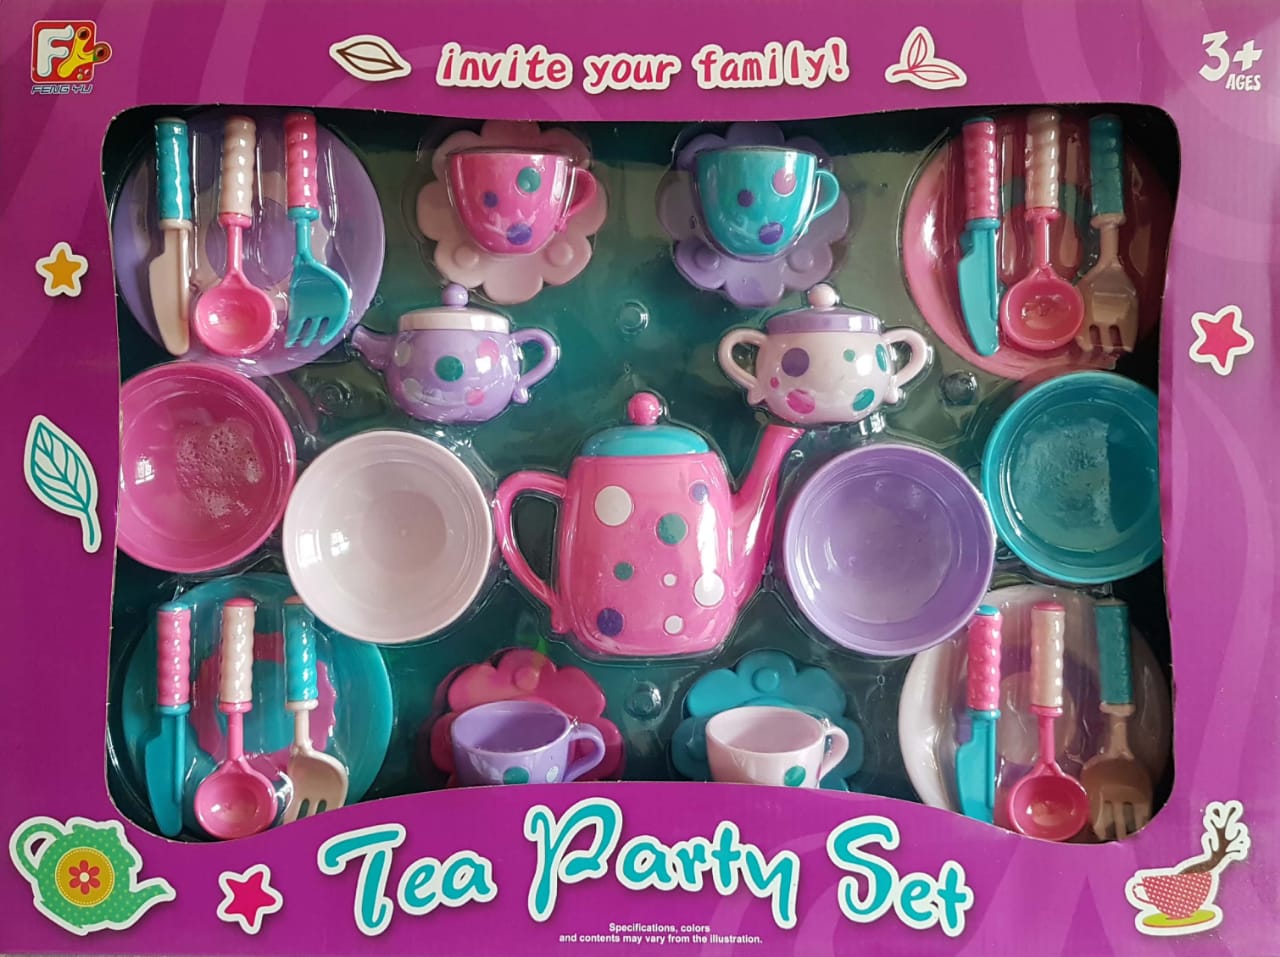 Tea Party Set